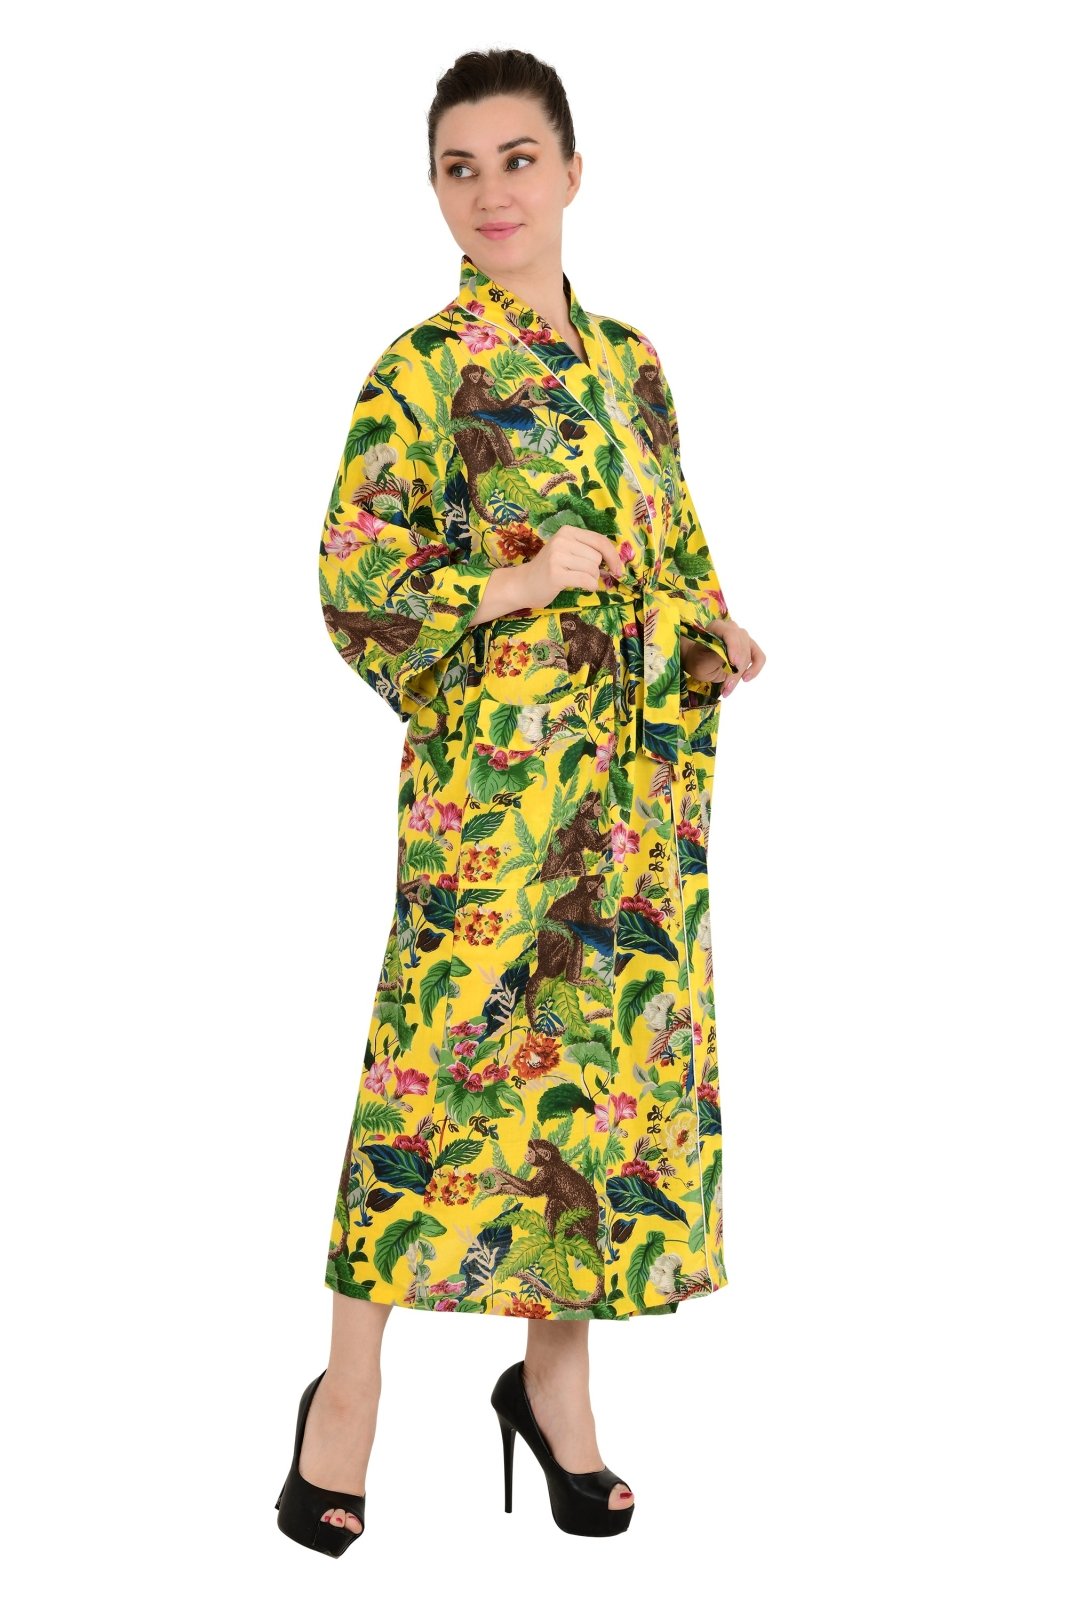 Boho Cotton Kimono House Robe Indian Handprinted Jungle Monkey Print | Lightweight Summer Luxury Beach Holidays Yacht Cover Up Stunning Dress - The Eastern Loom